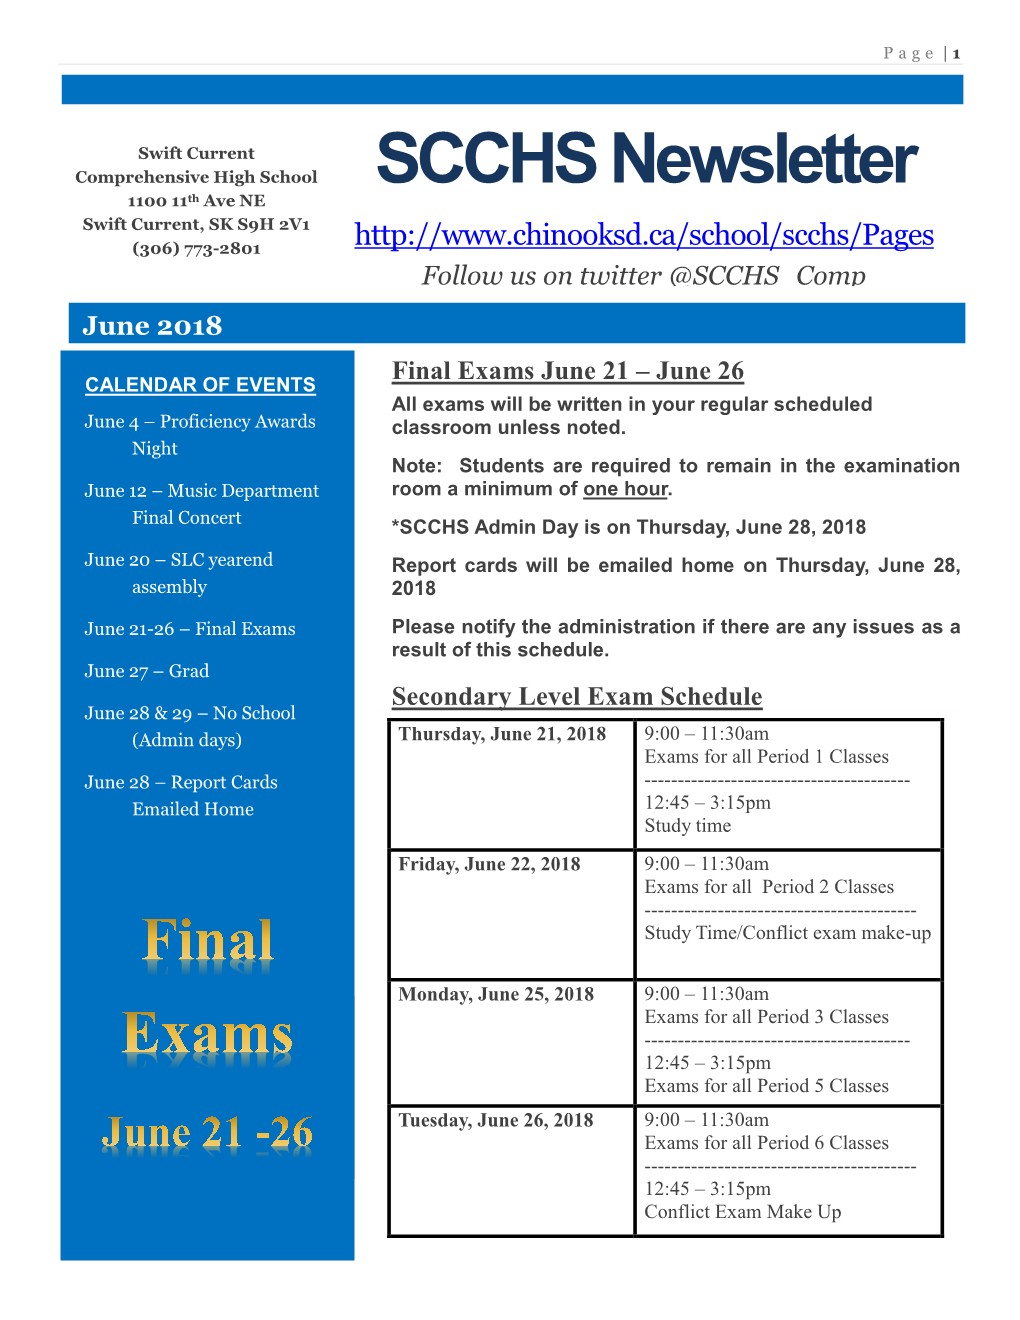 SCCHS Newsletter 1100 11Th Ave NE Swift Current, SK S9H 2V1 (306) 773-2801